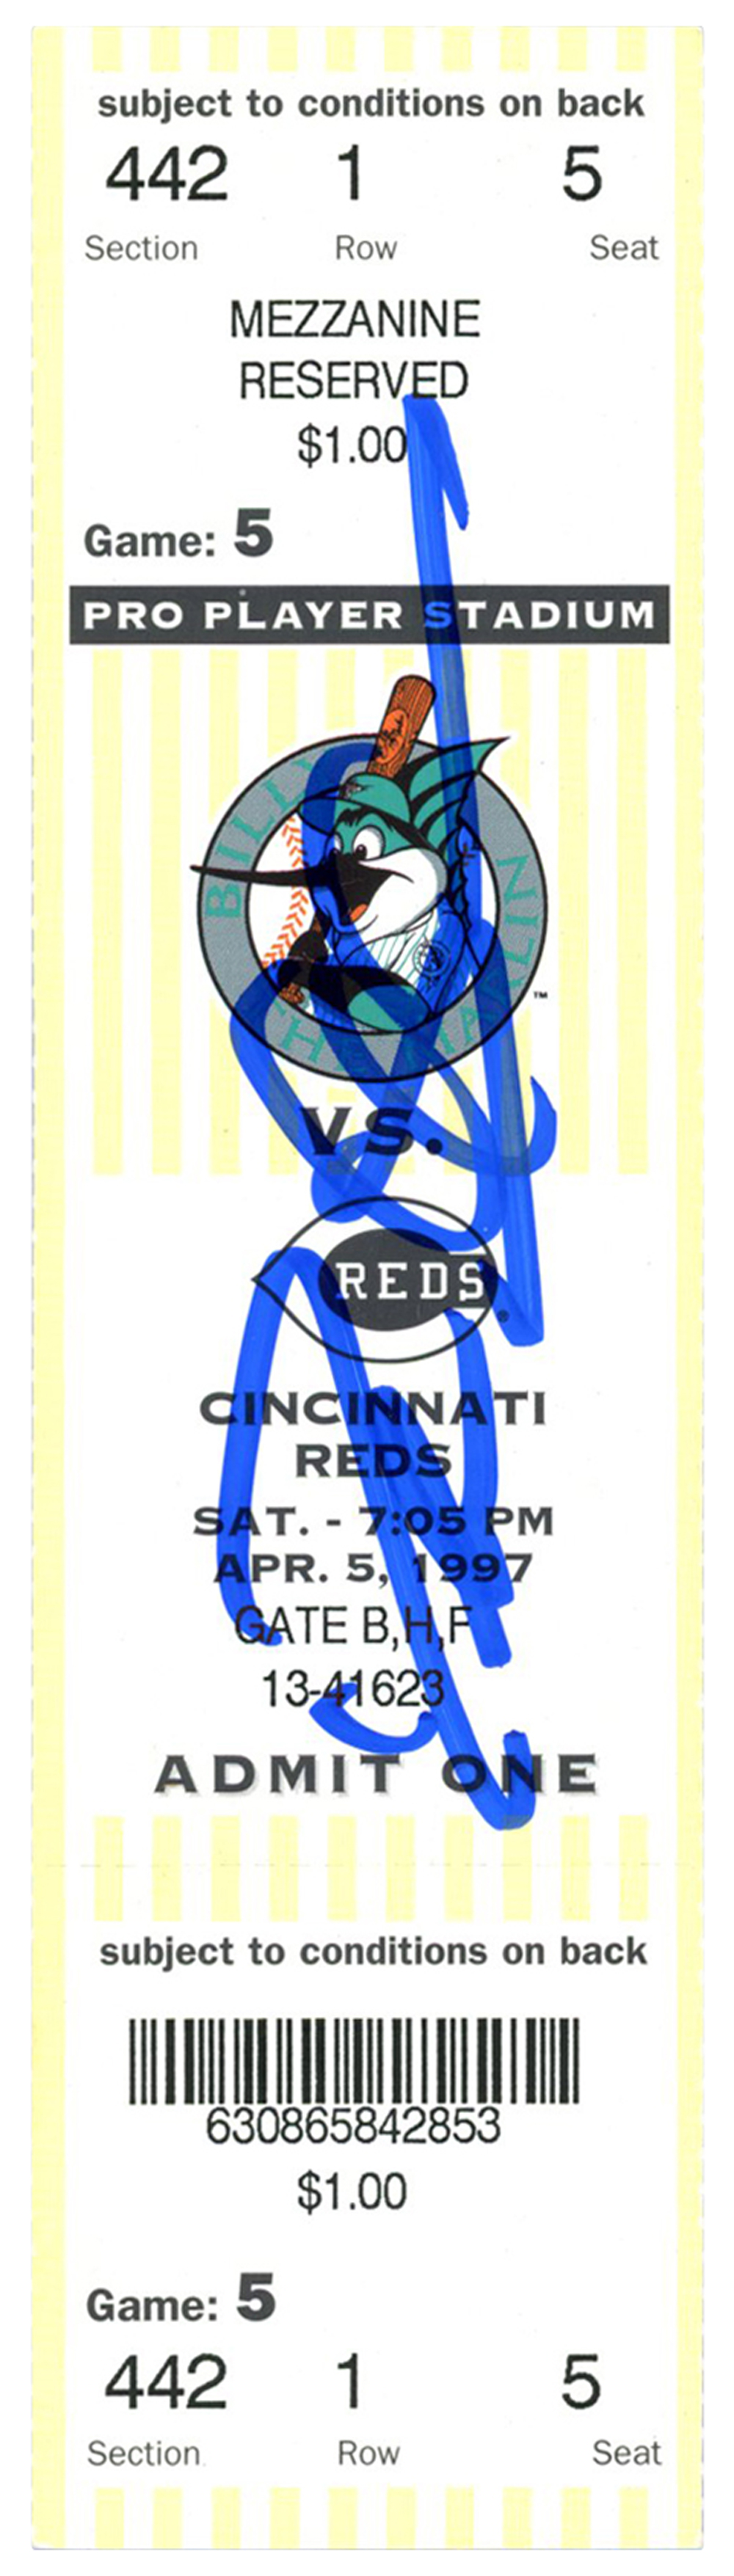 Deion Sanders Signed Cincinnati Reds 4/5/1997 @ Marlins Ticket BAS